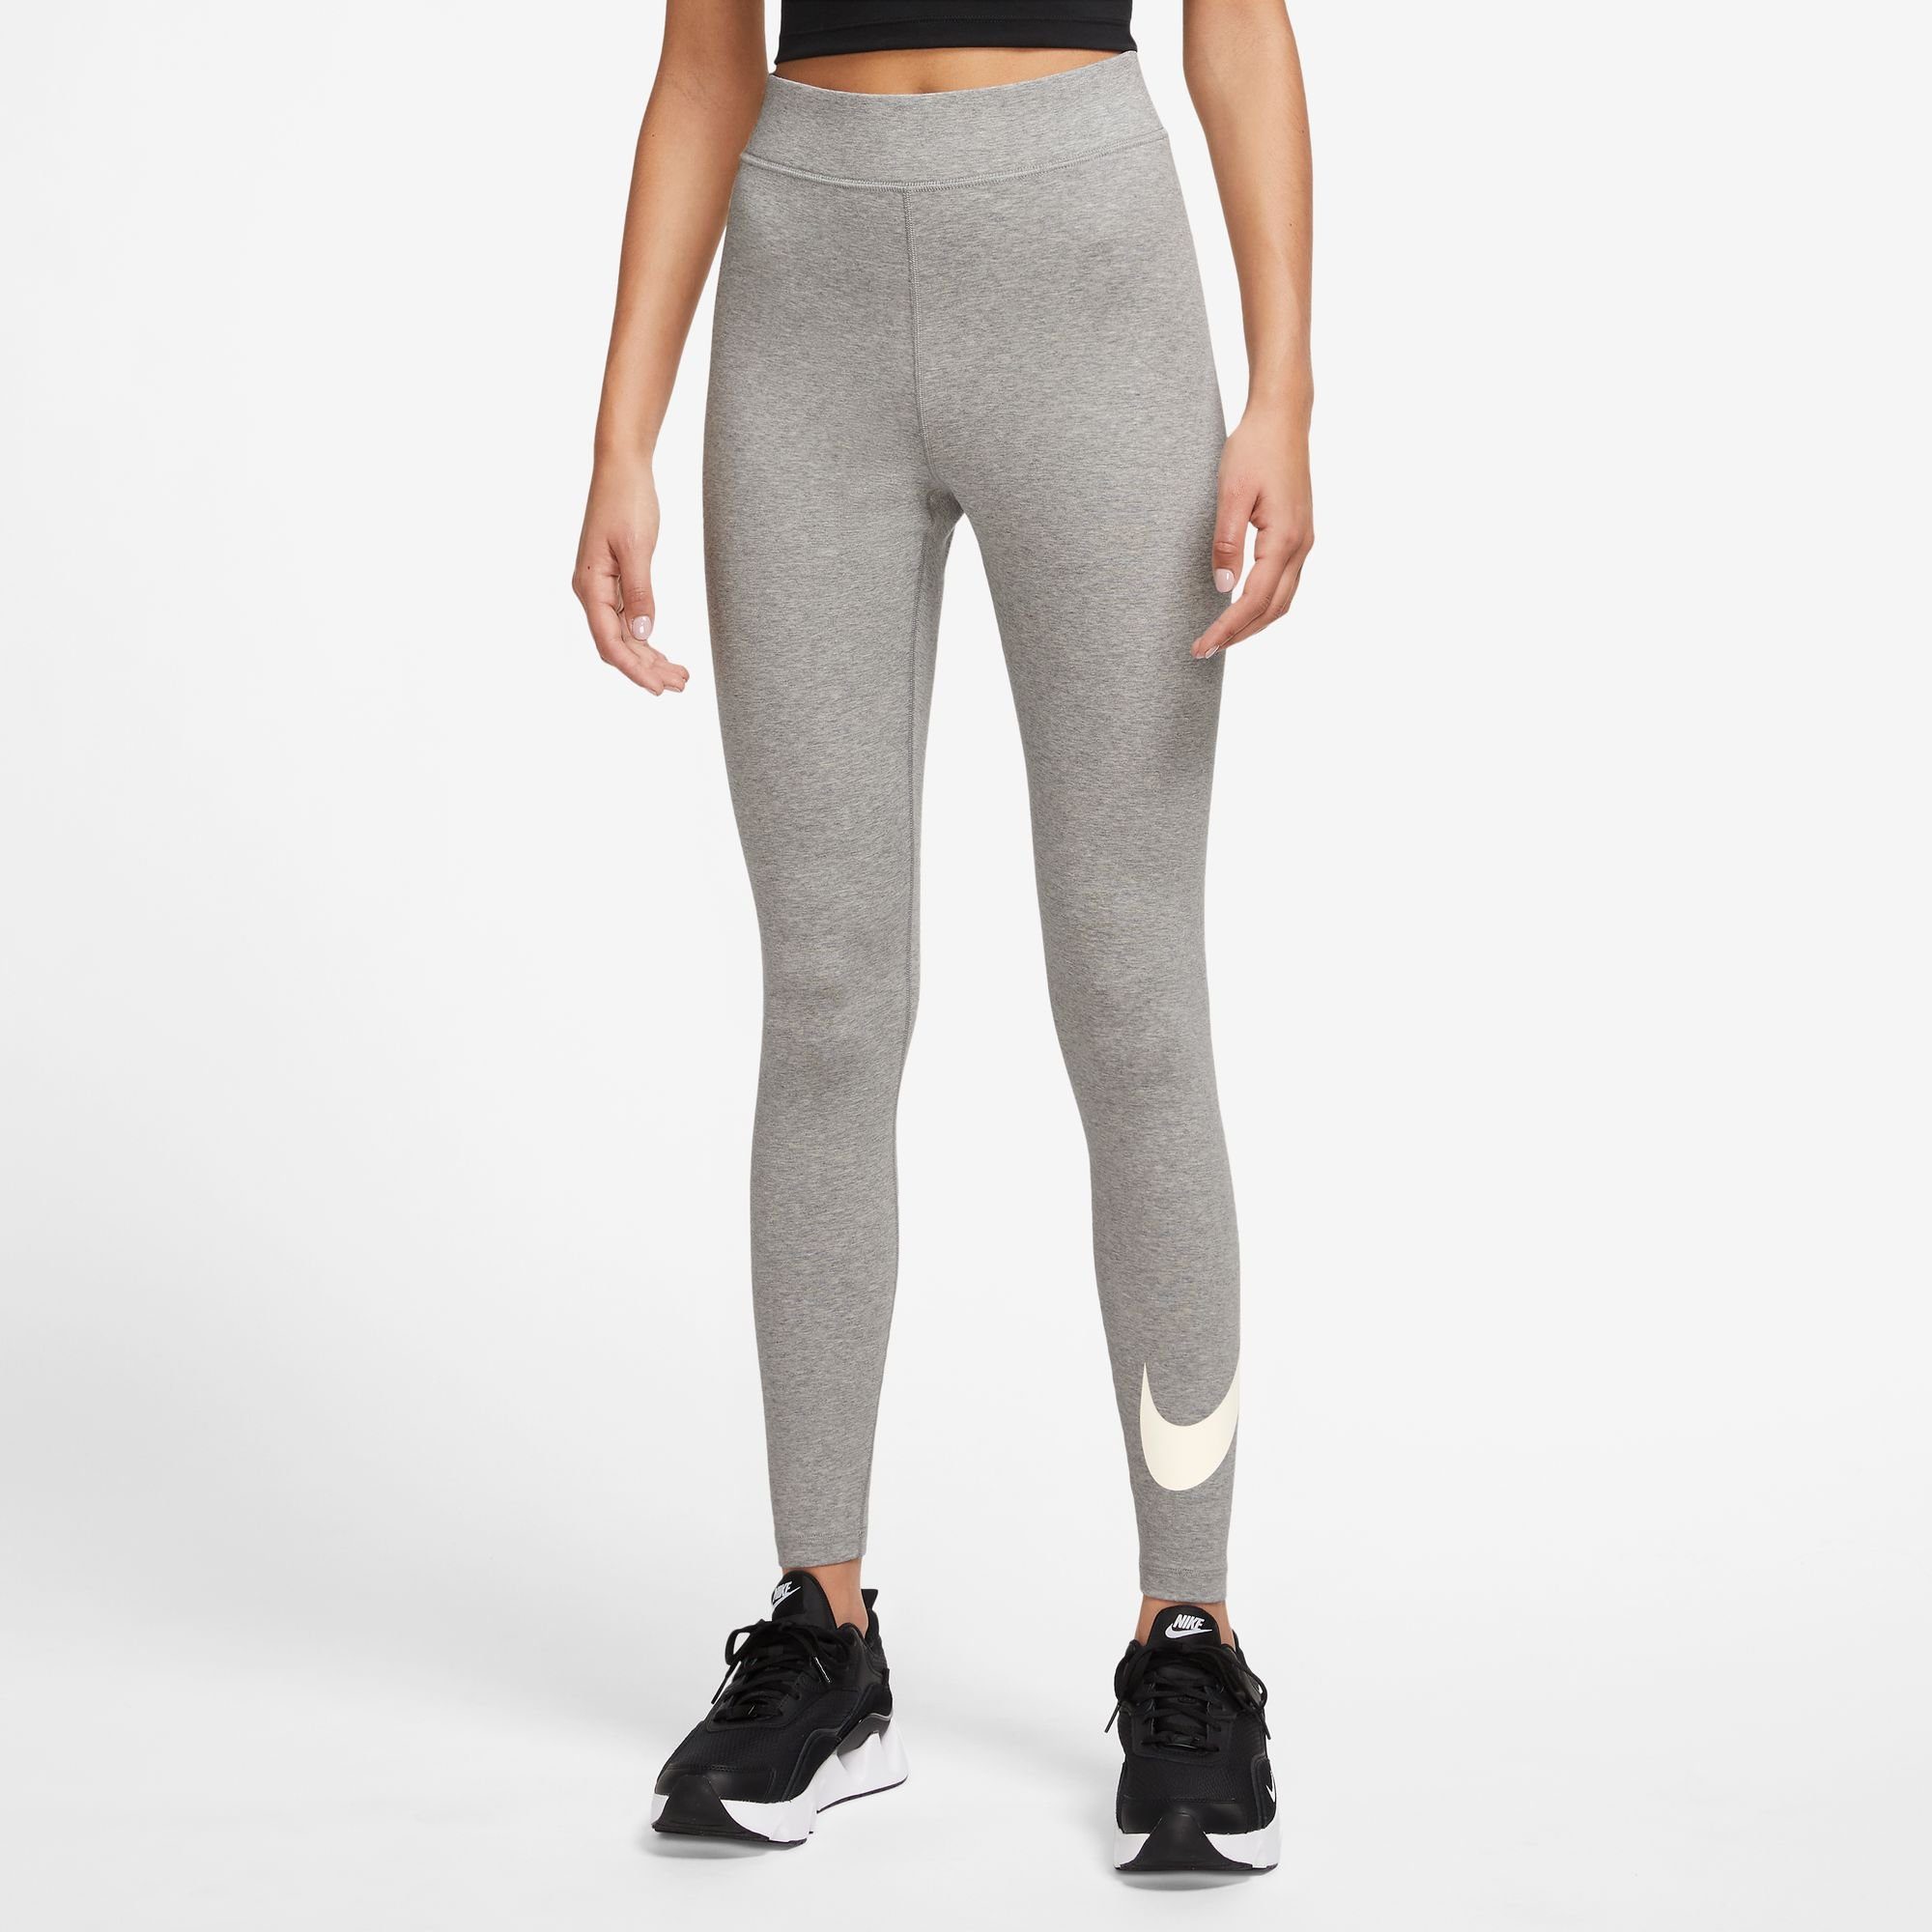 OTTO CLASSICS online LEGGINGS bij HIGH-WAISTED Legging GRAPHIC WOMEN\'S | Sportswear Nike